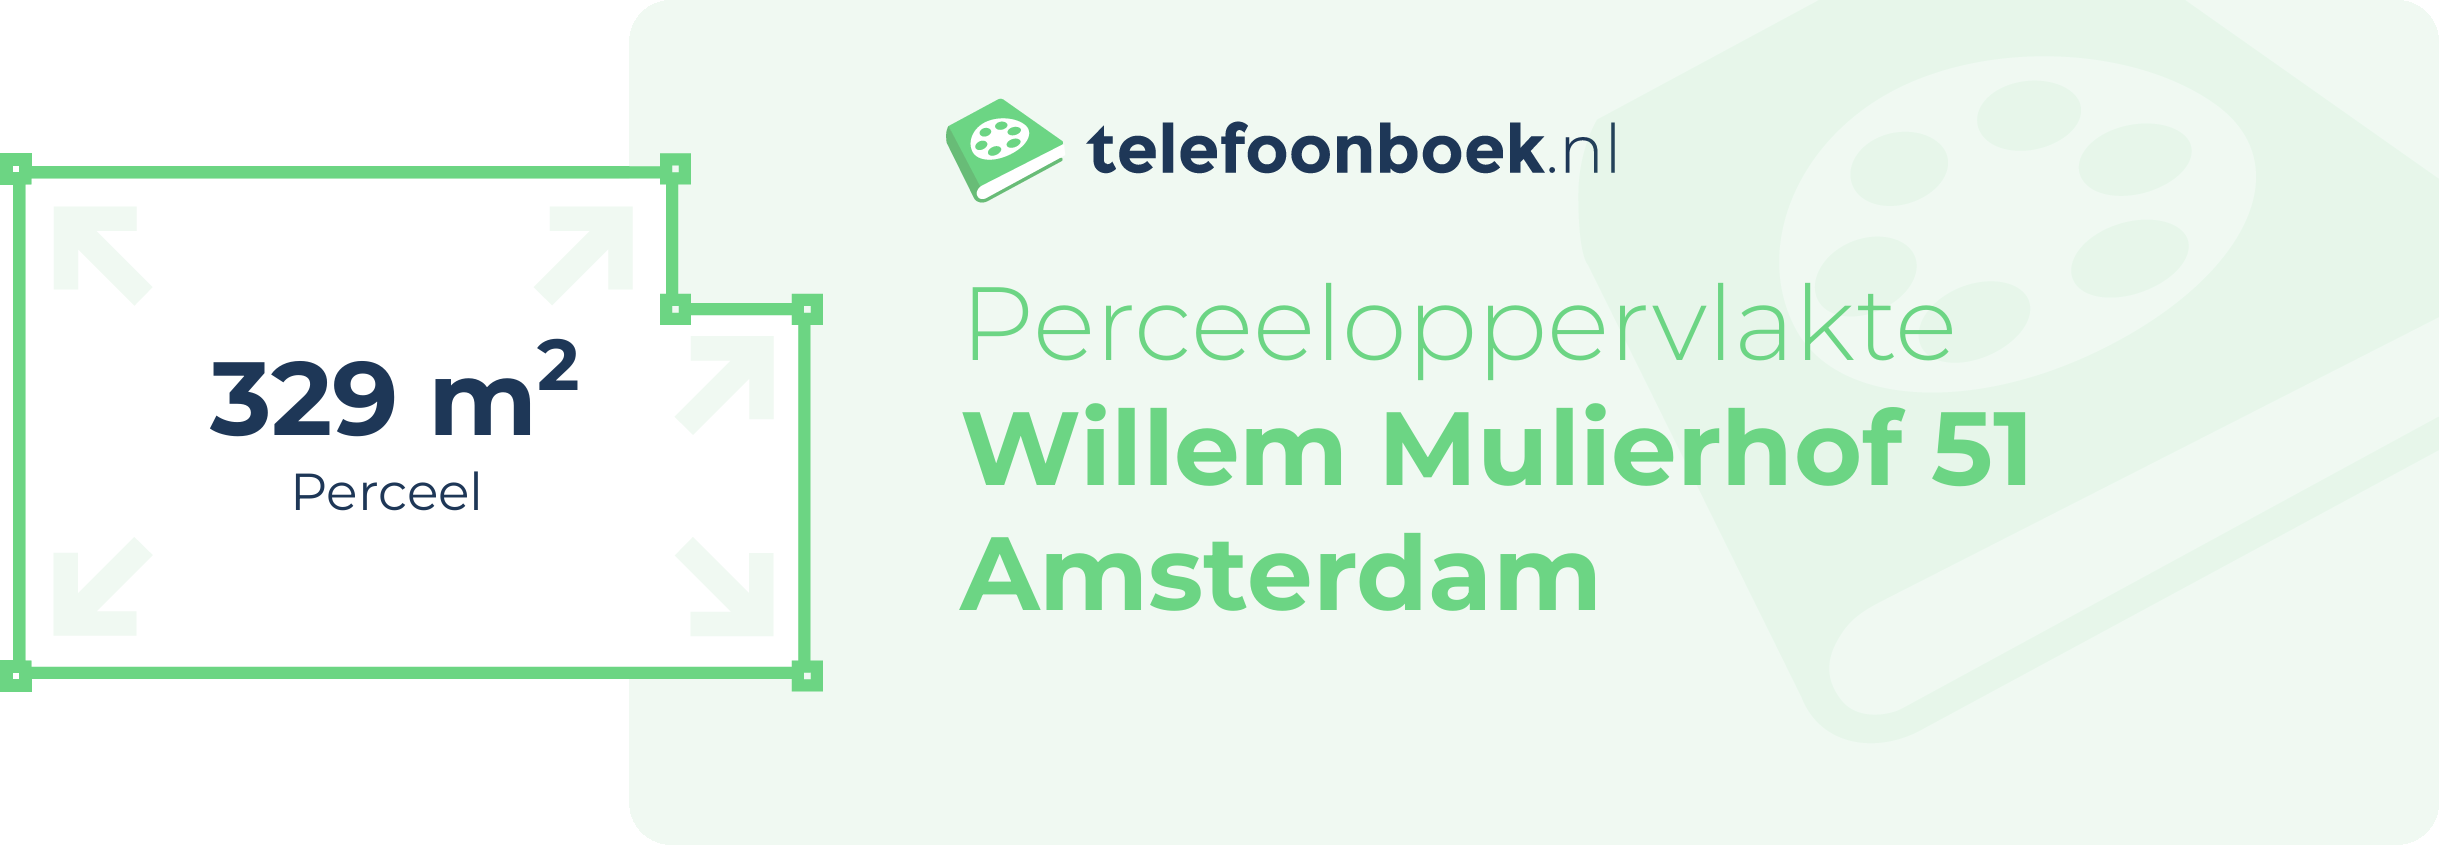 Perceeloppervlakte Willem Mulierhof 51 Amsterdam